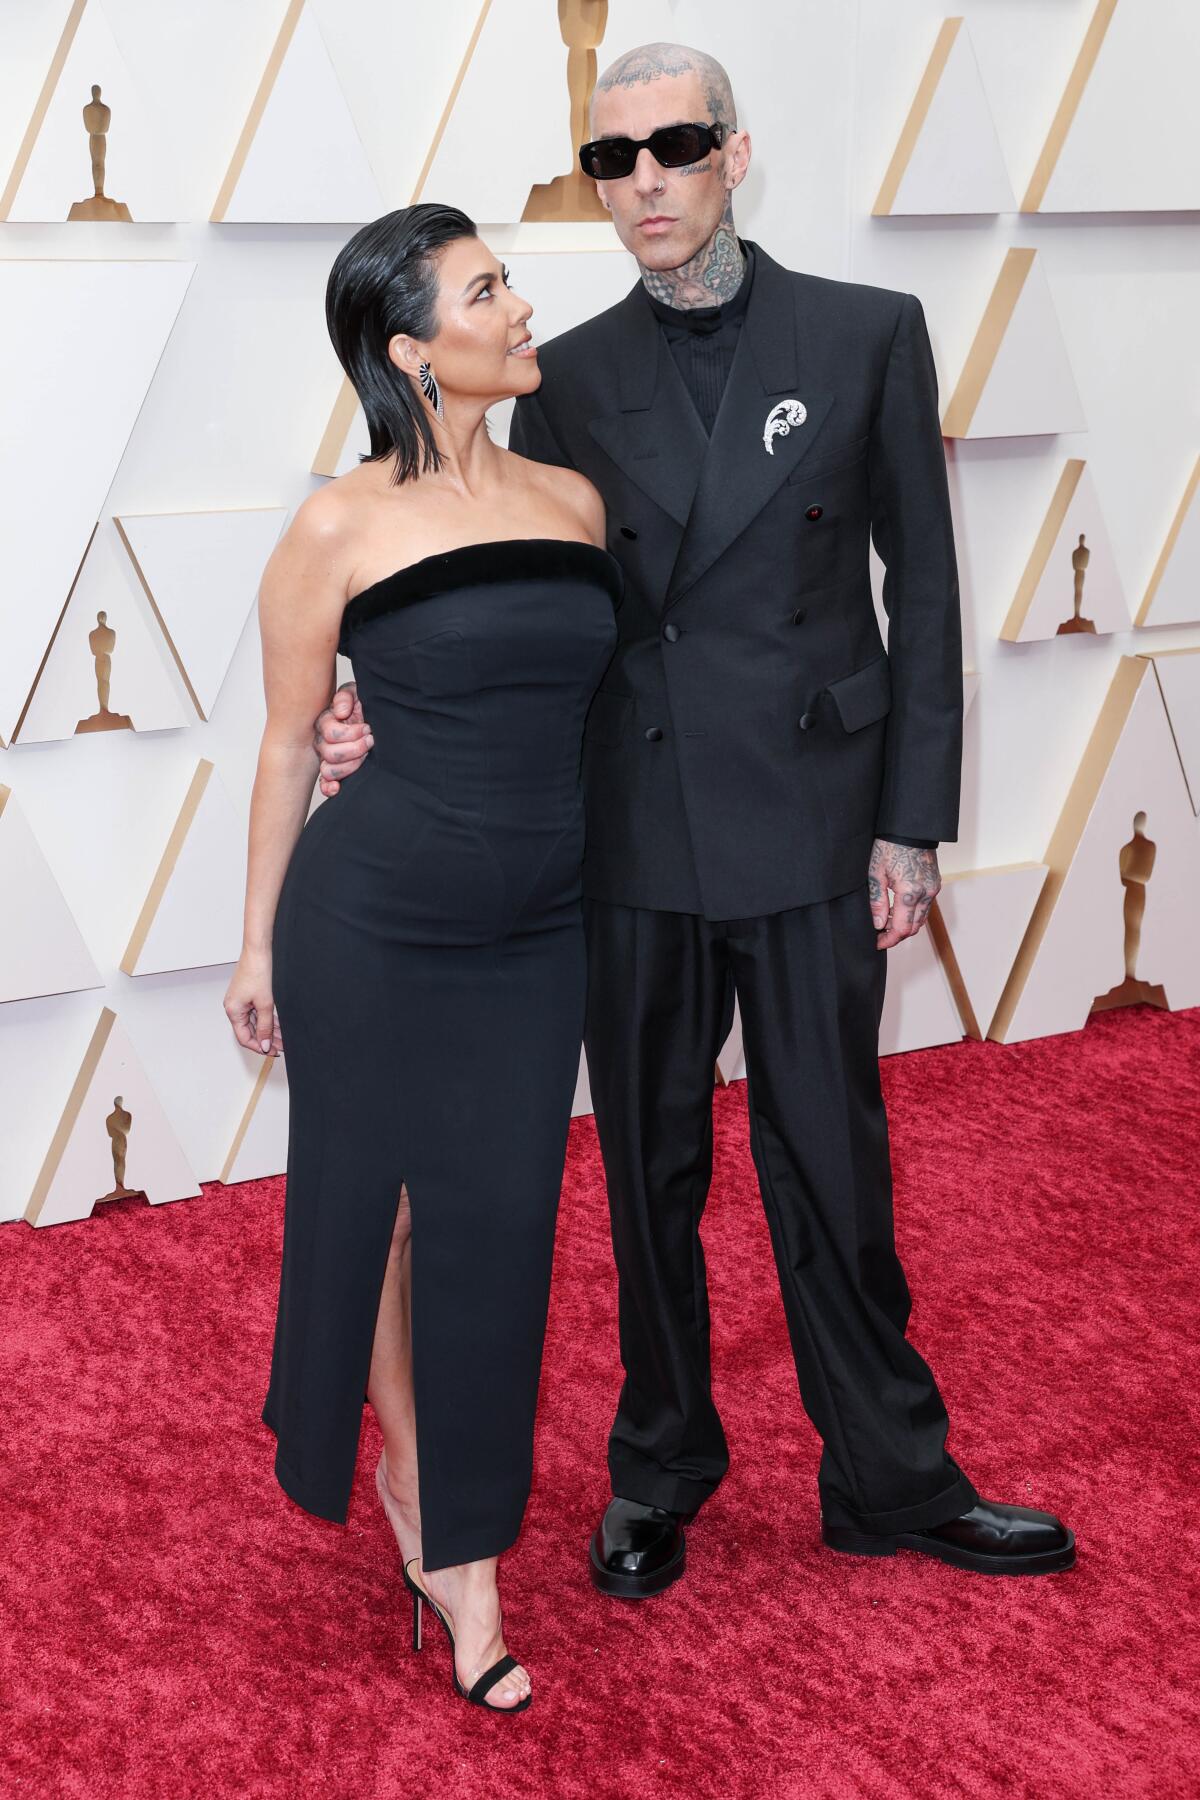 Did Kourtney Kardashian marry Travis Barker for new TV show? - Los Angeles  Times